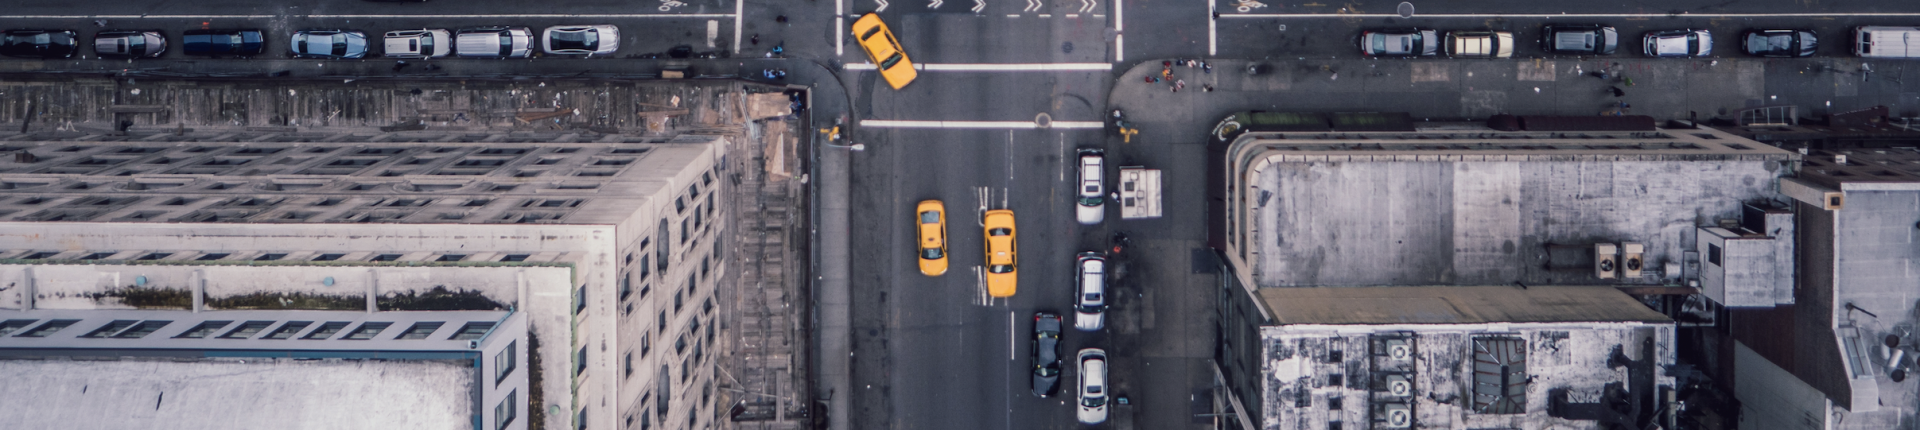 Overhead Image of New York City Street 